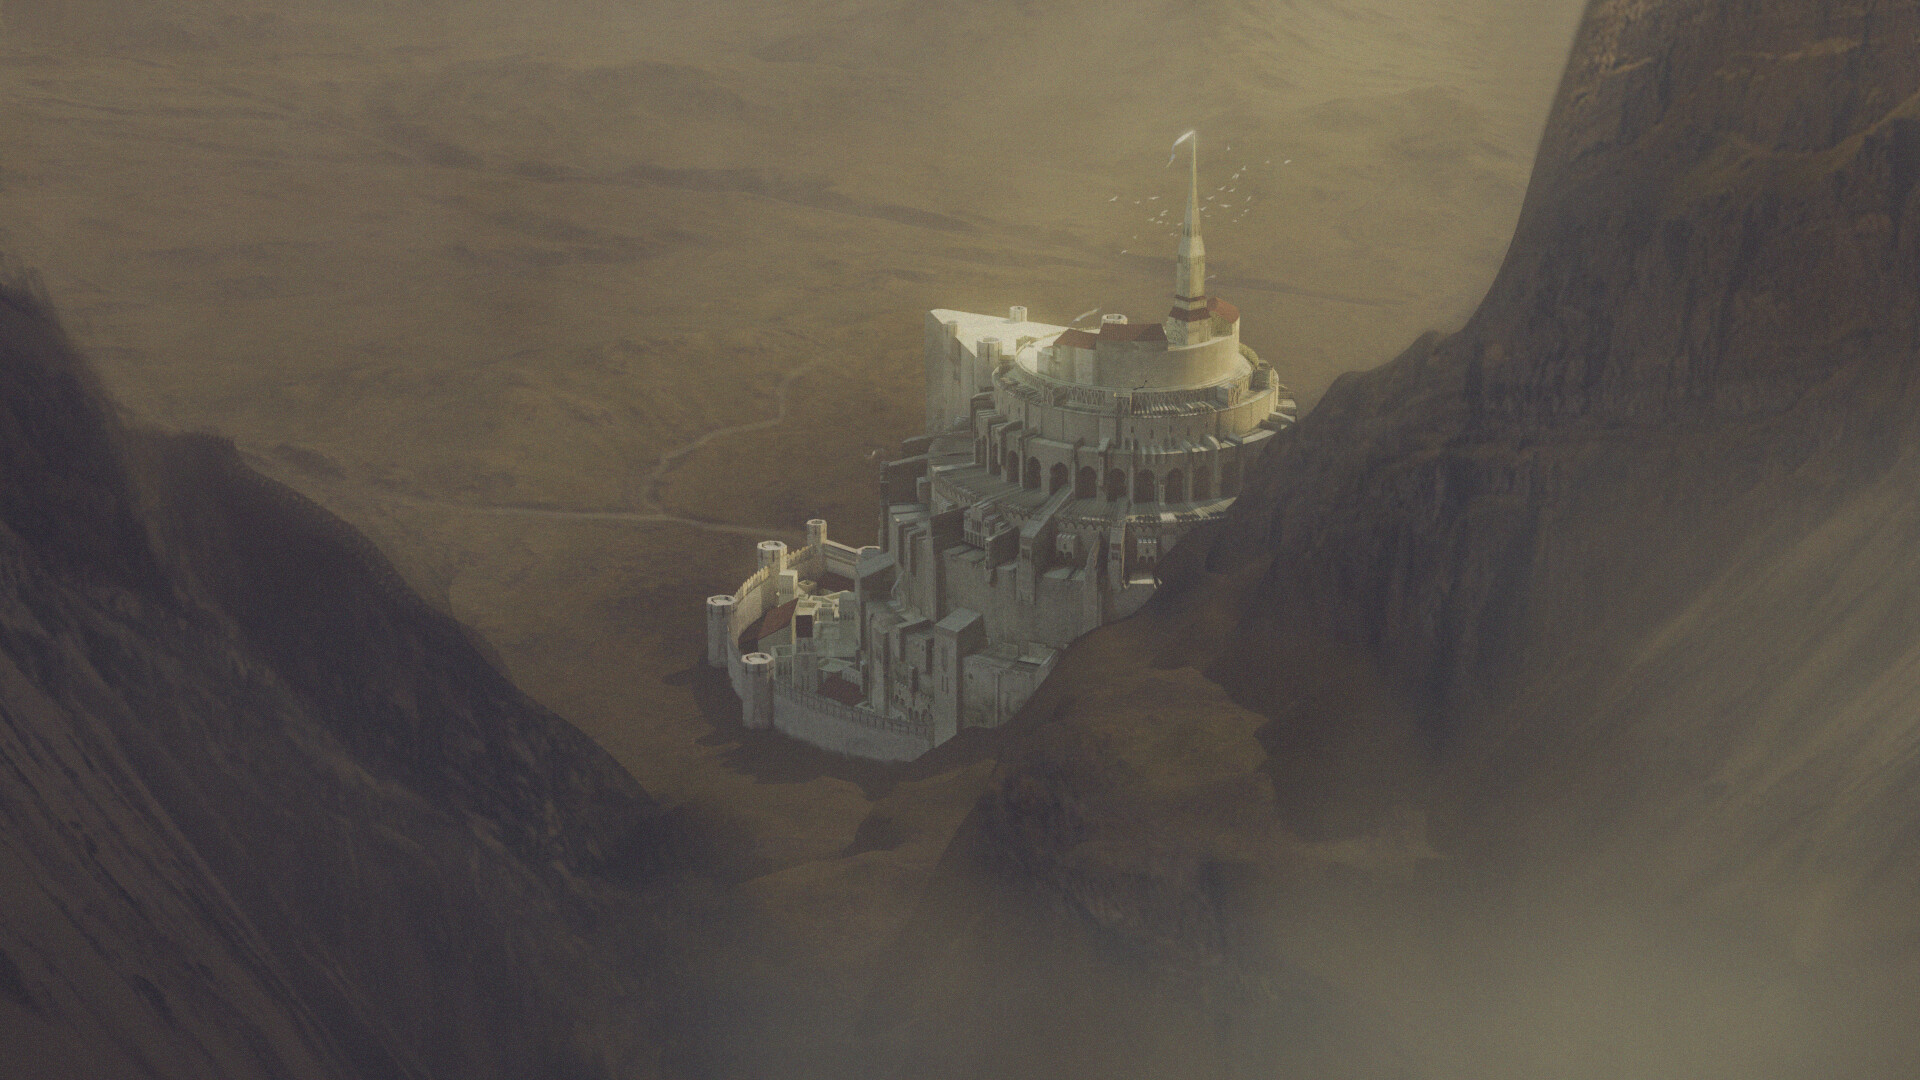 Minas Tirith Wallpapers - Top Free Minas Tirith Backgrounds